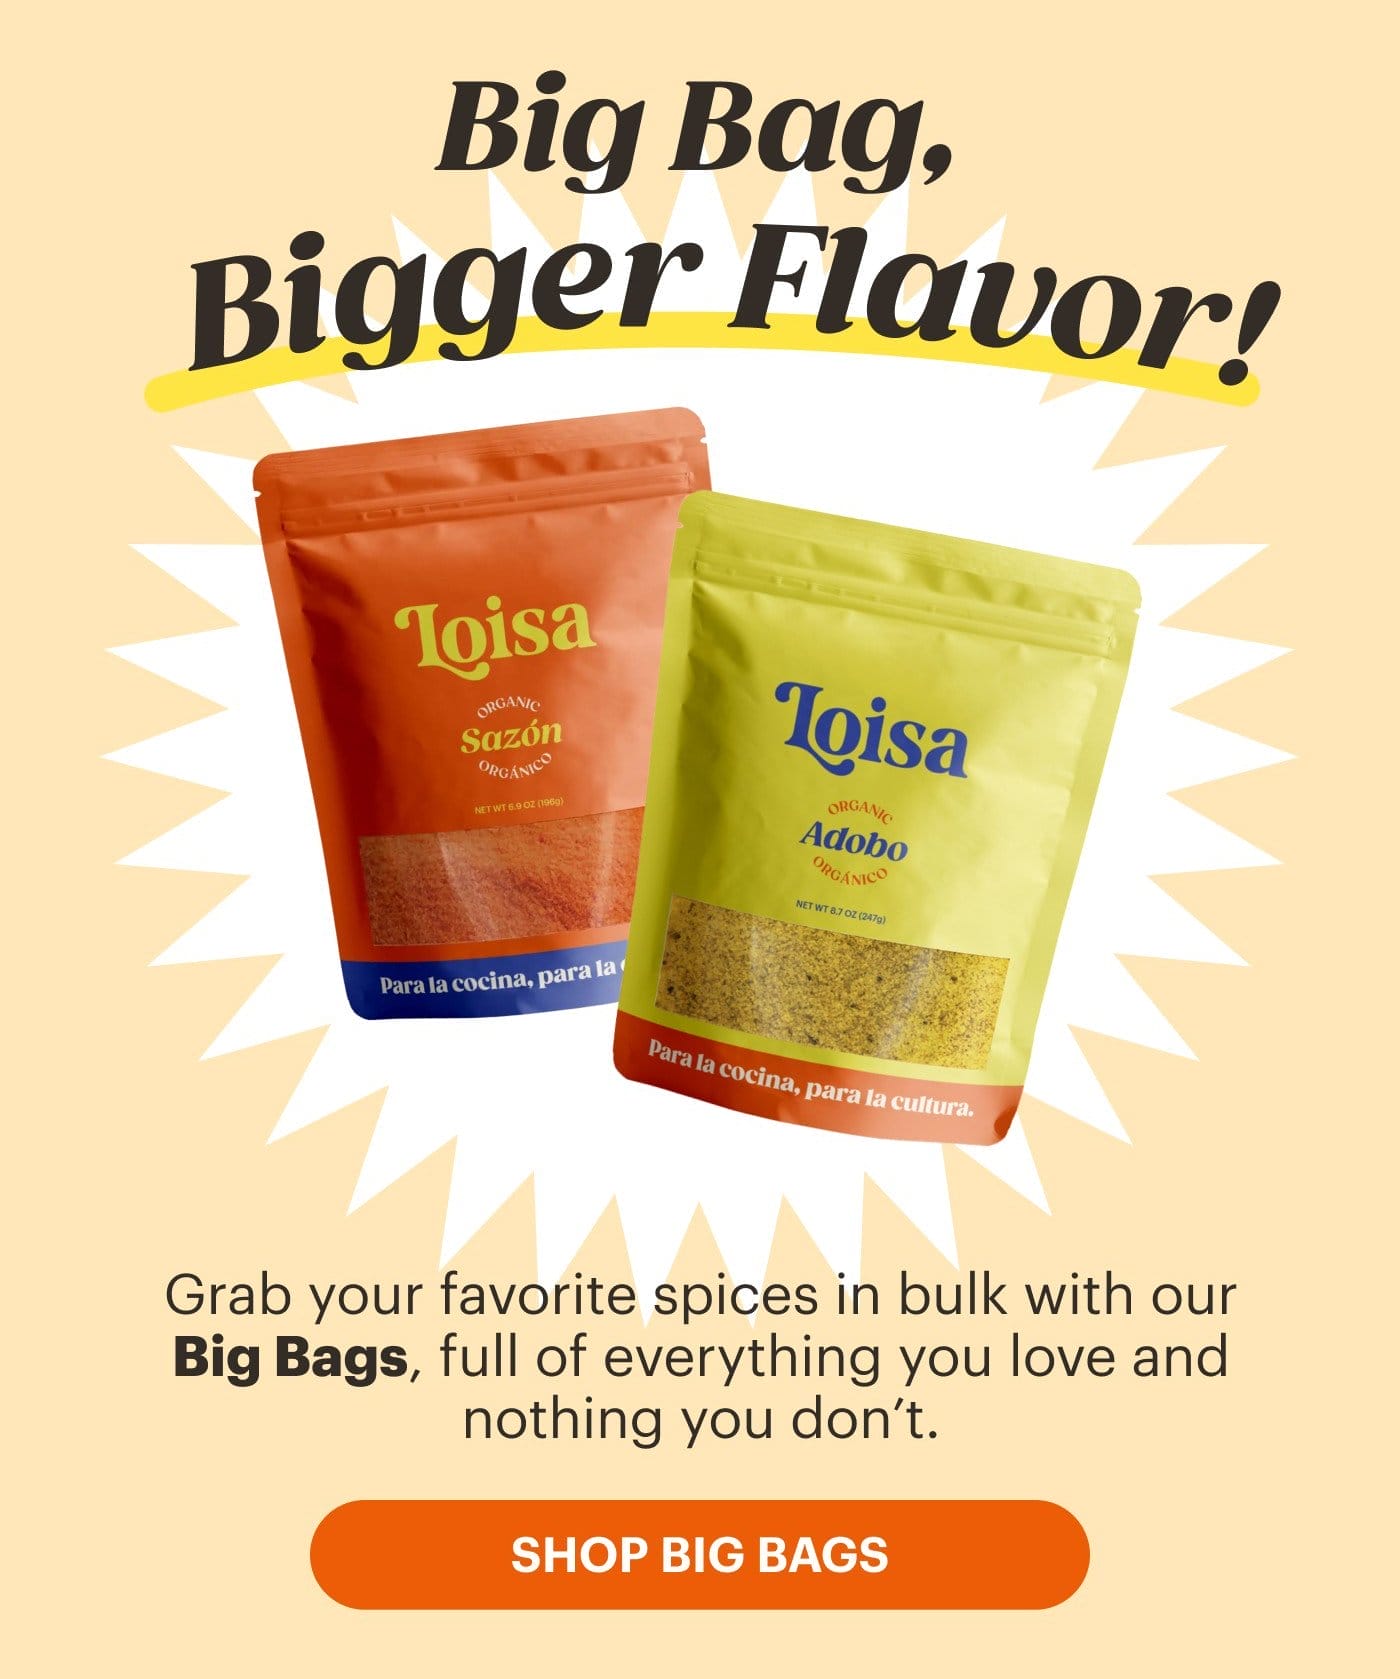 Big Bag, Bigger Flavor! SHOP BIGBAGS